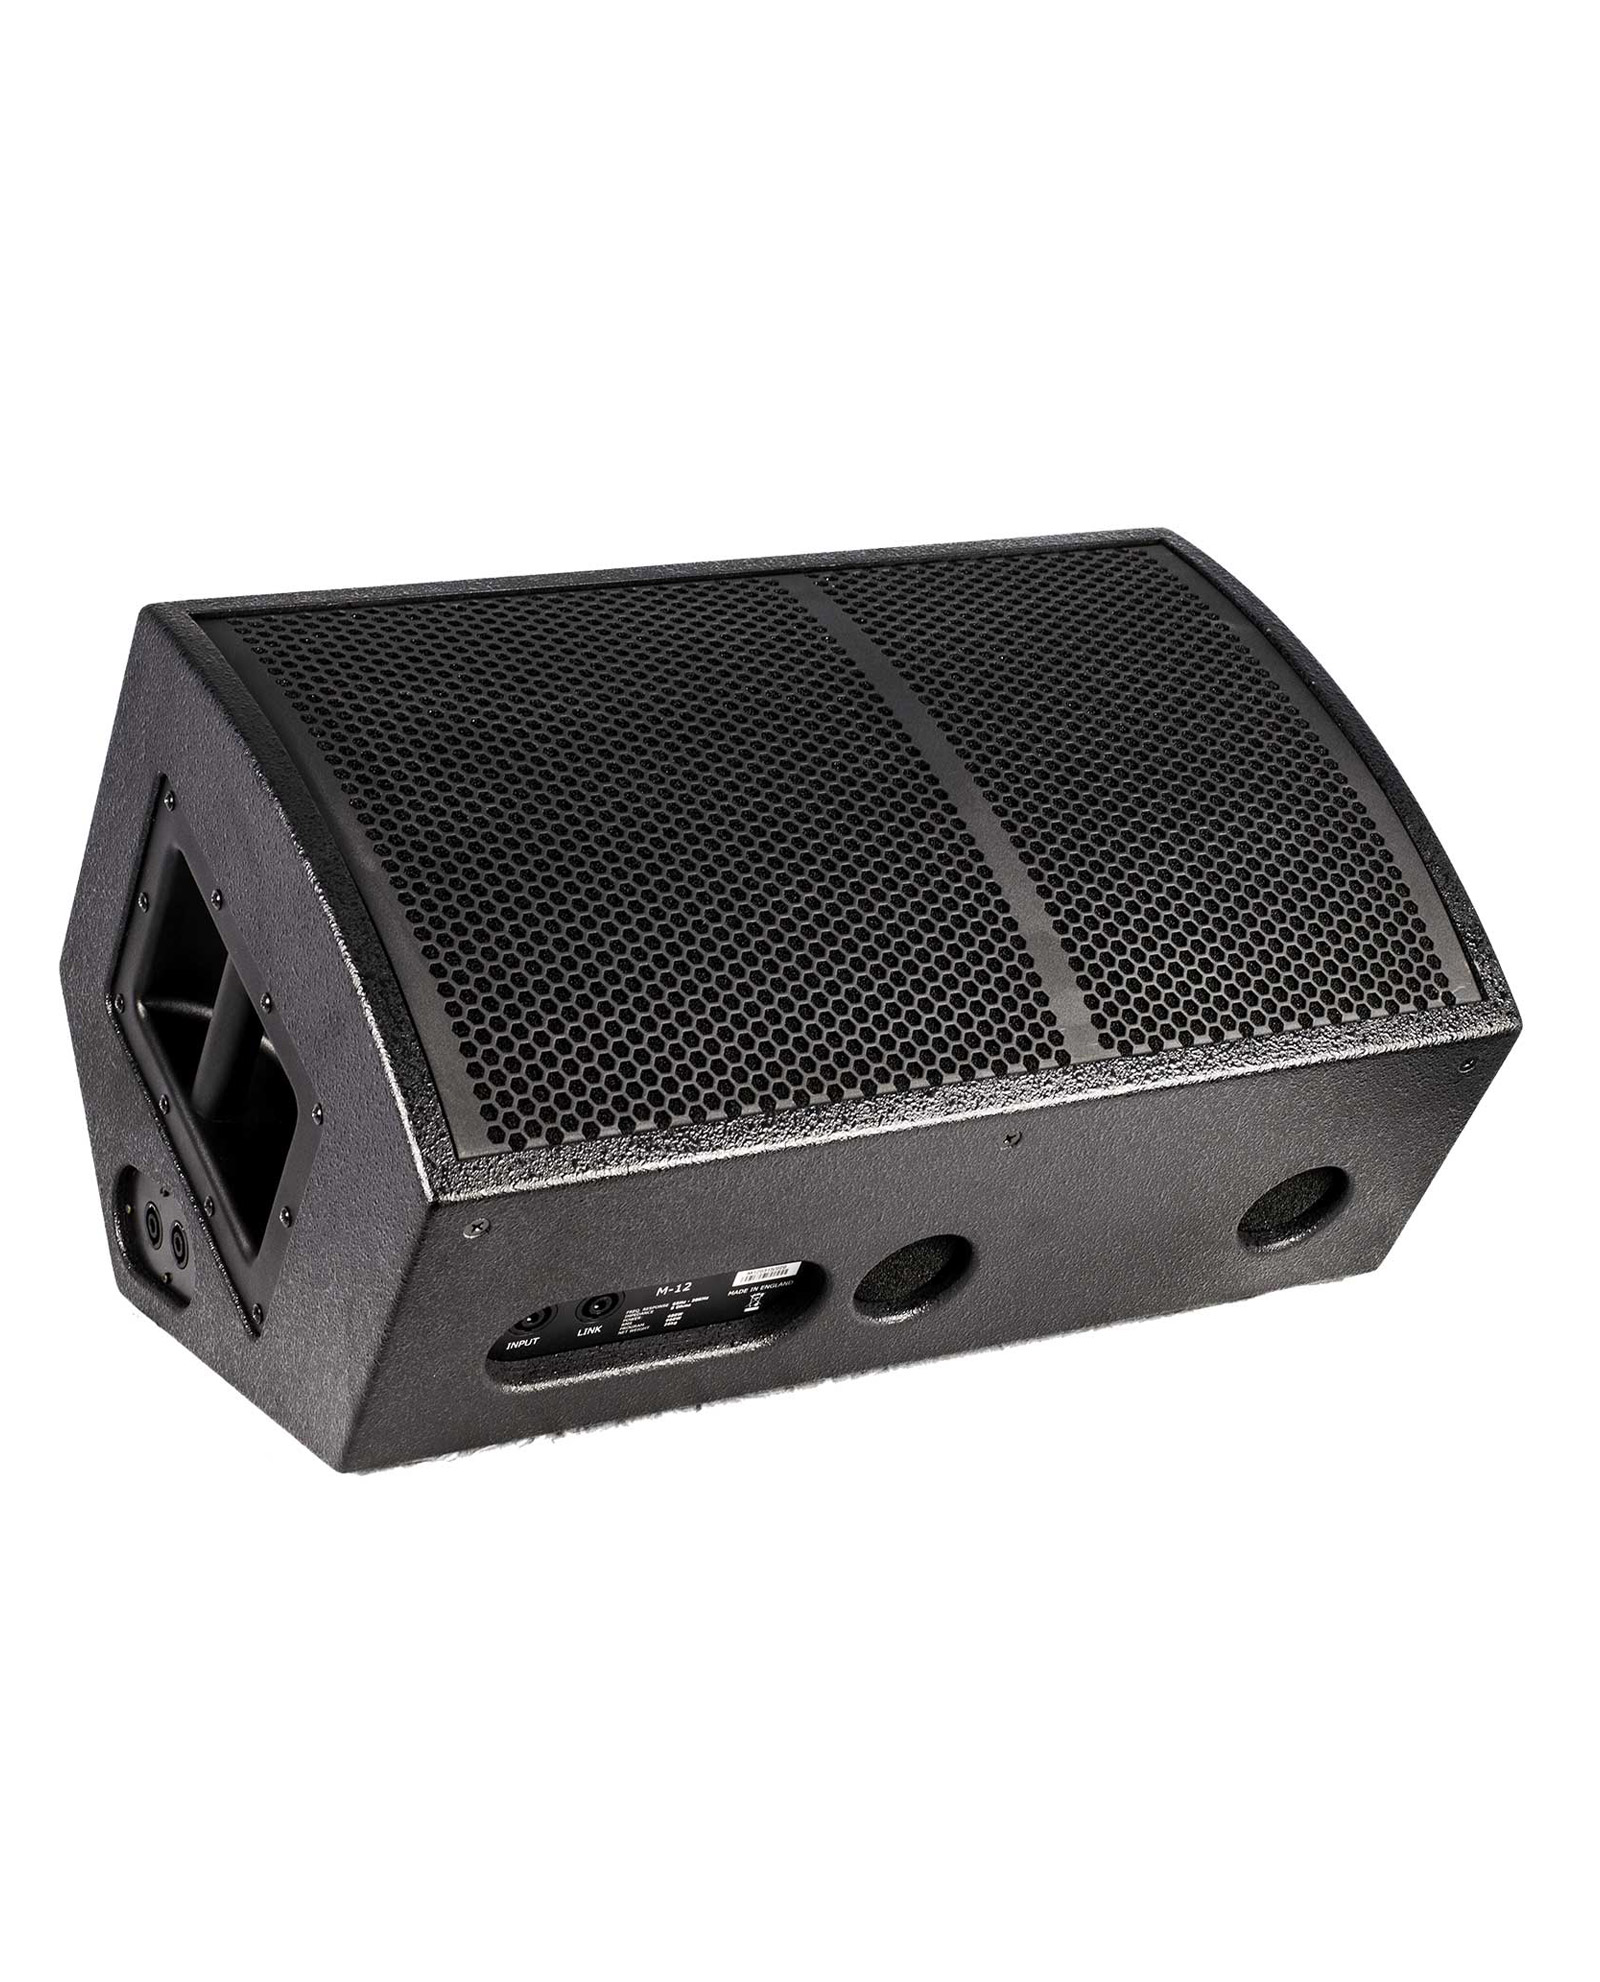 EM Acoustics M-12 Speaker